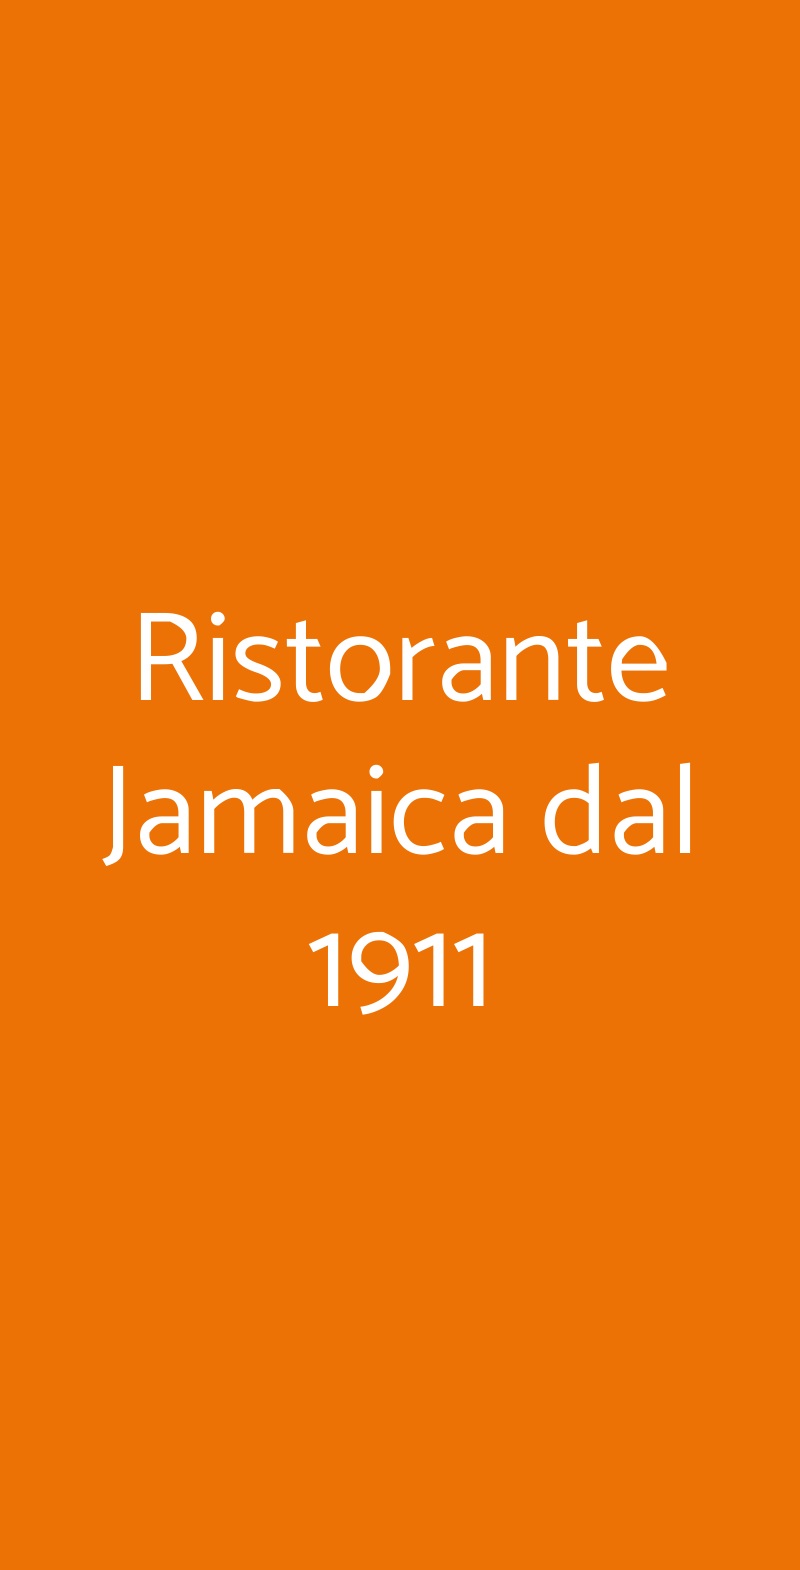 Ristorante Jamaica dal 1911 Milano menù 1 pagina